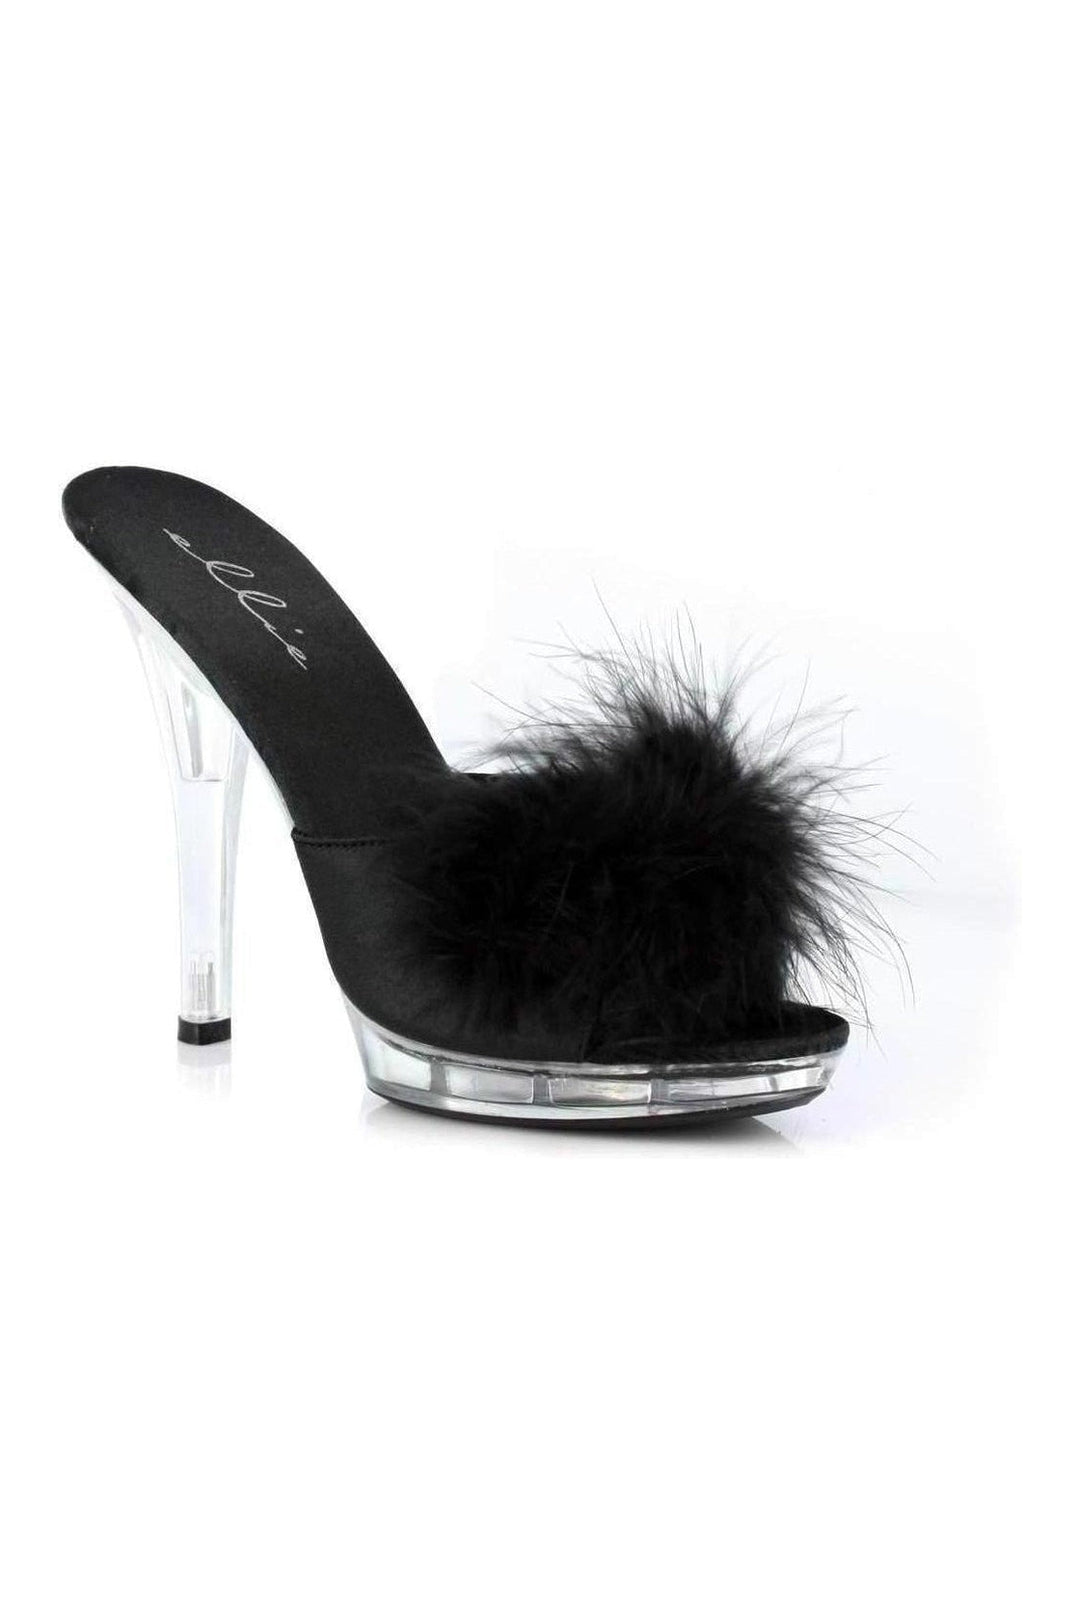 SASHA Marabou | Black Patent-Ellie Shoes-SEXYSHOES.COM